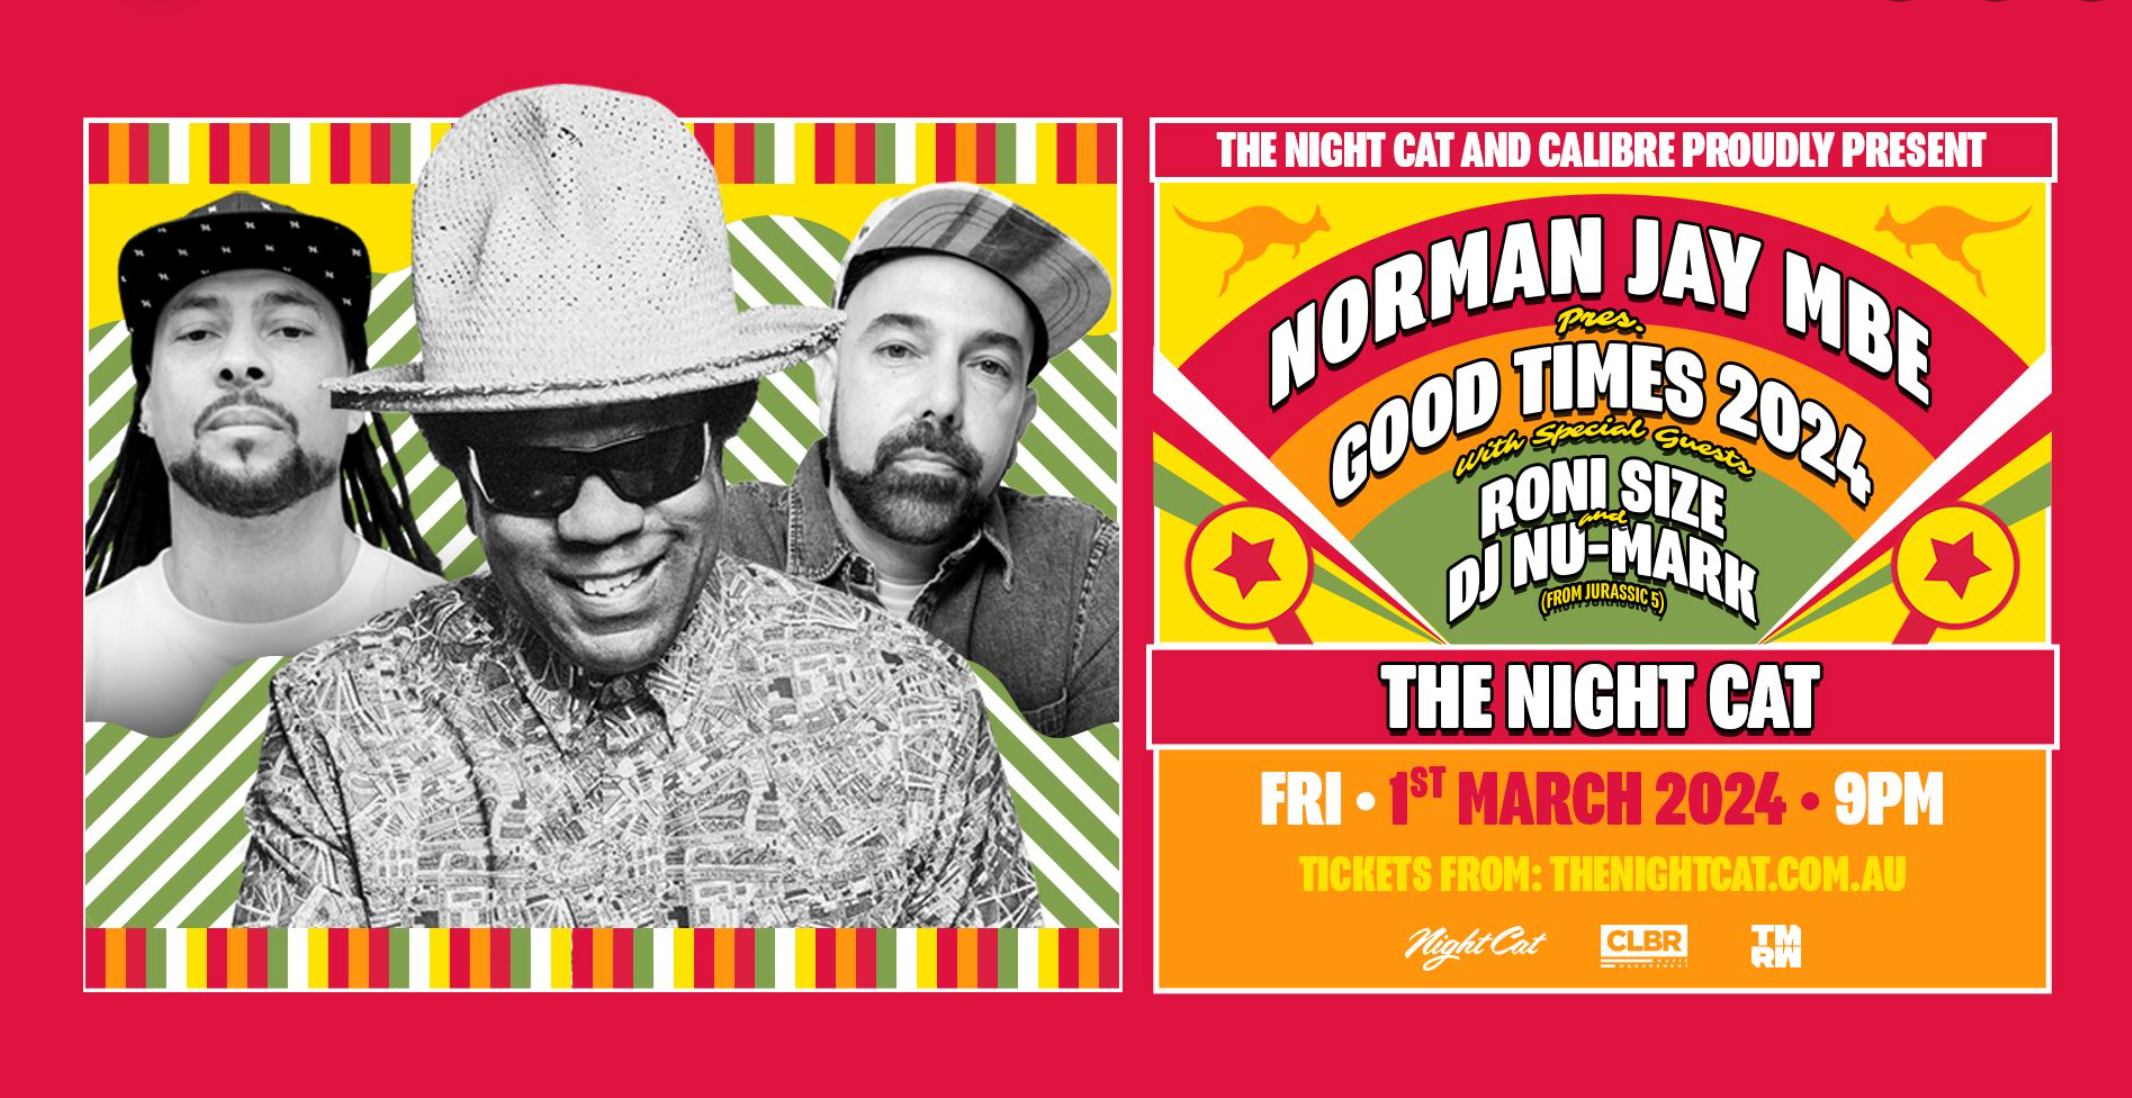 Good Times feat. Norman Jay MBE, Roni Size & DJ Nu-mark - Página frontal